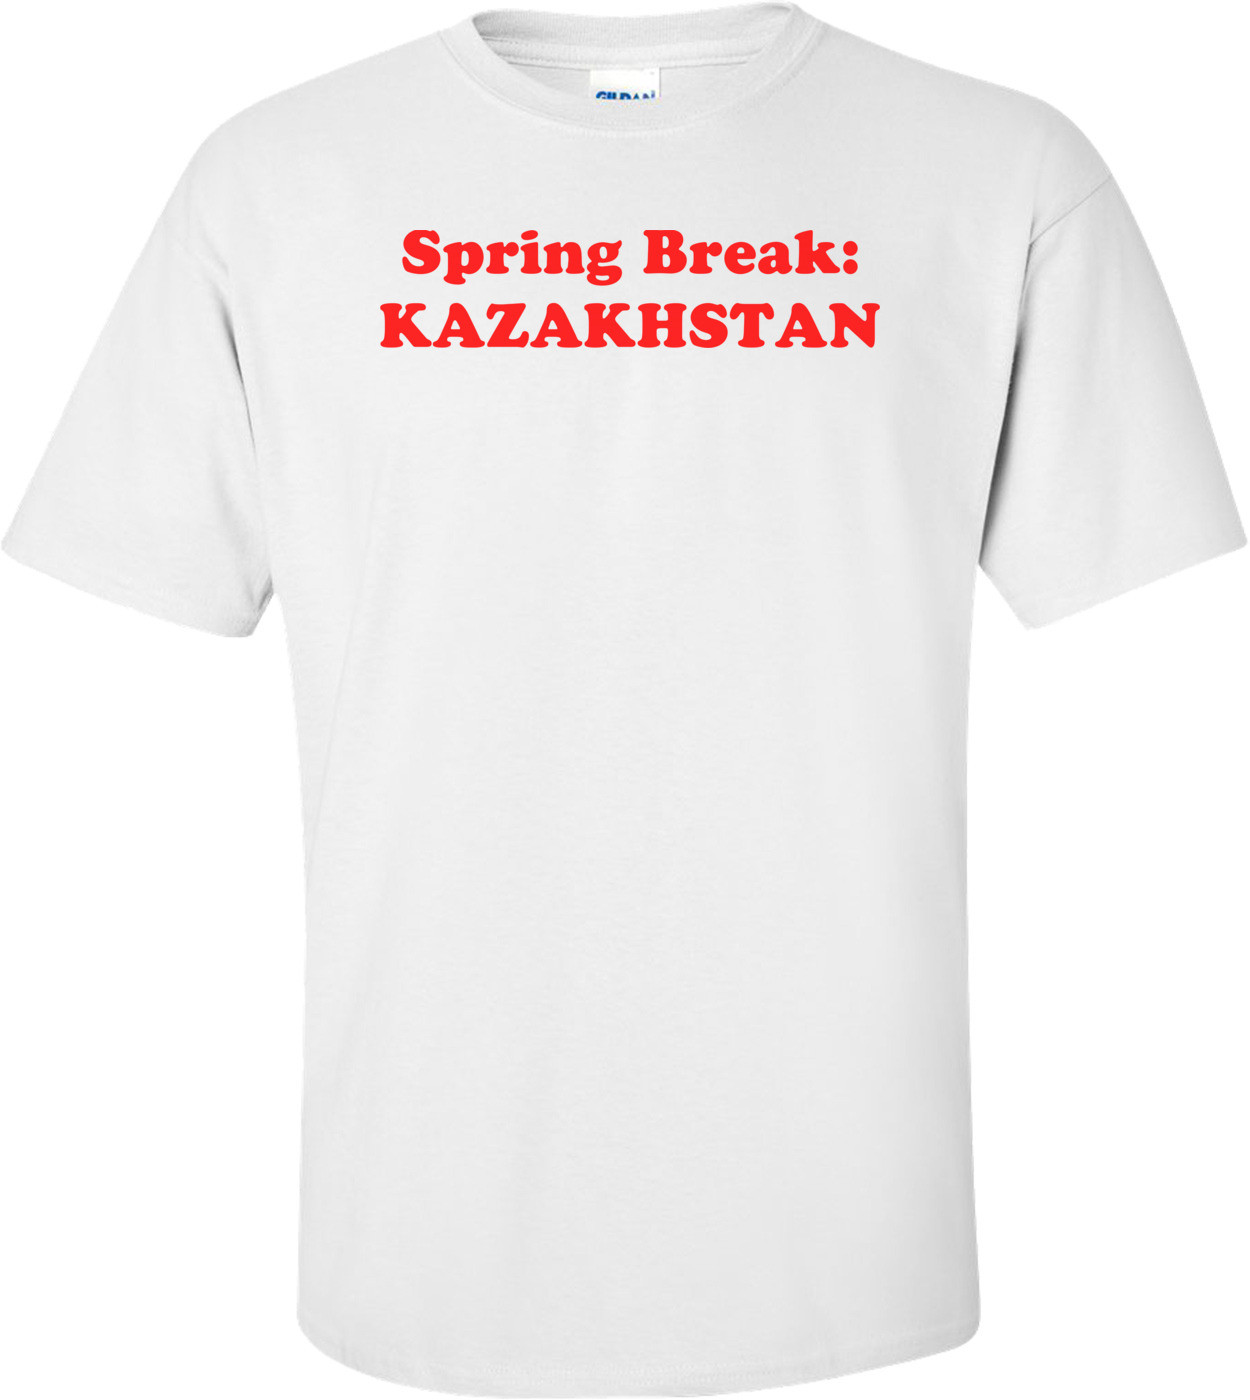 Spring Break: KAZAKHSTAN